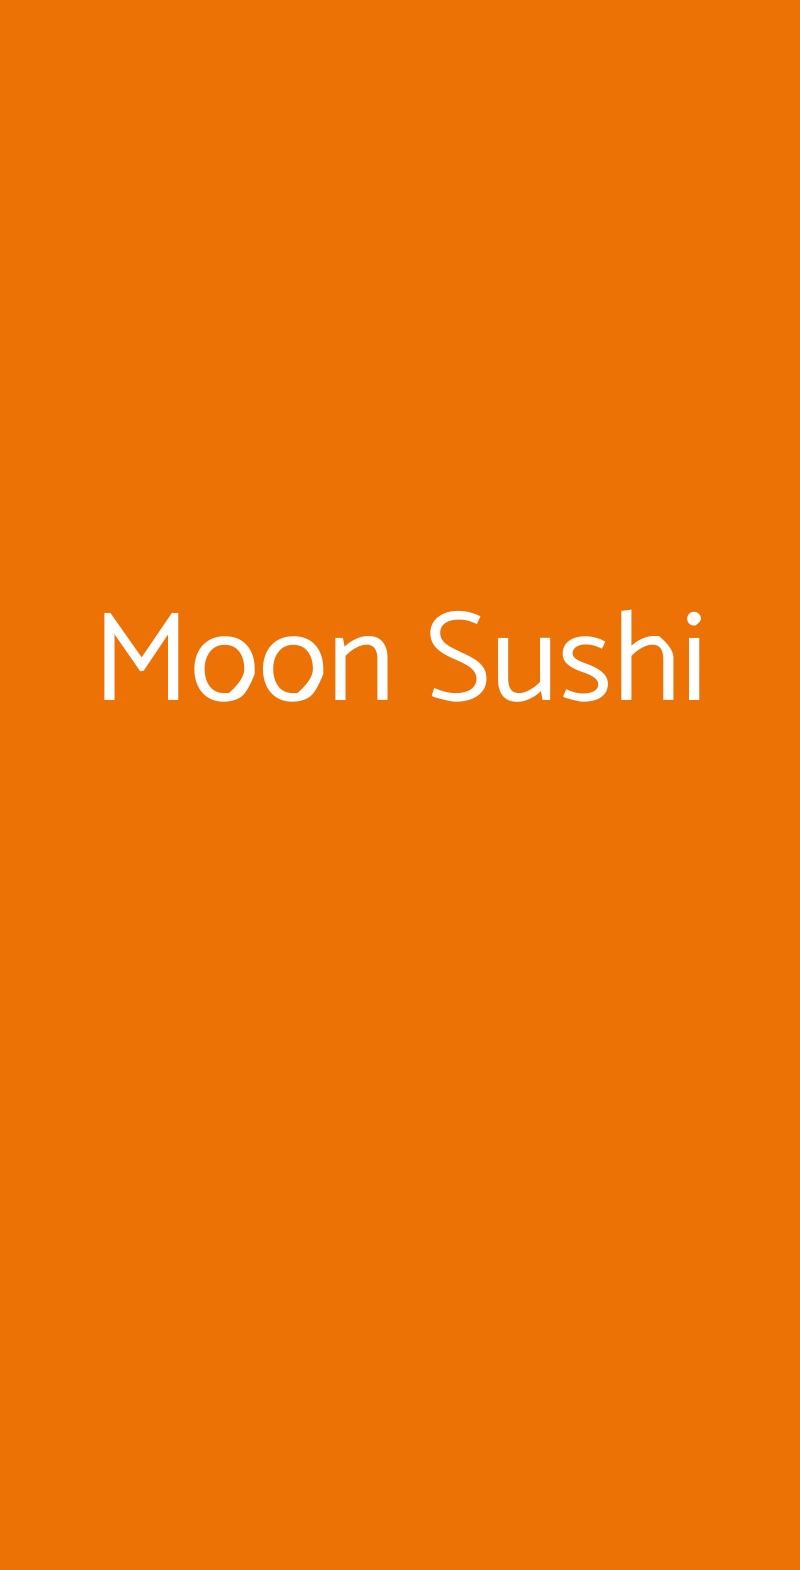 Moon Sushi Milano menù 1 pagina